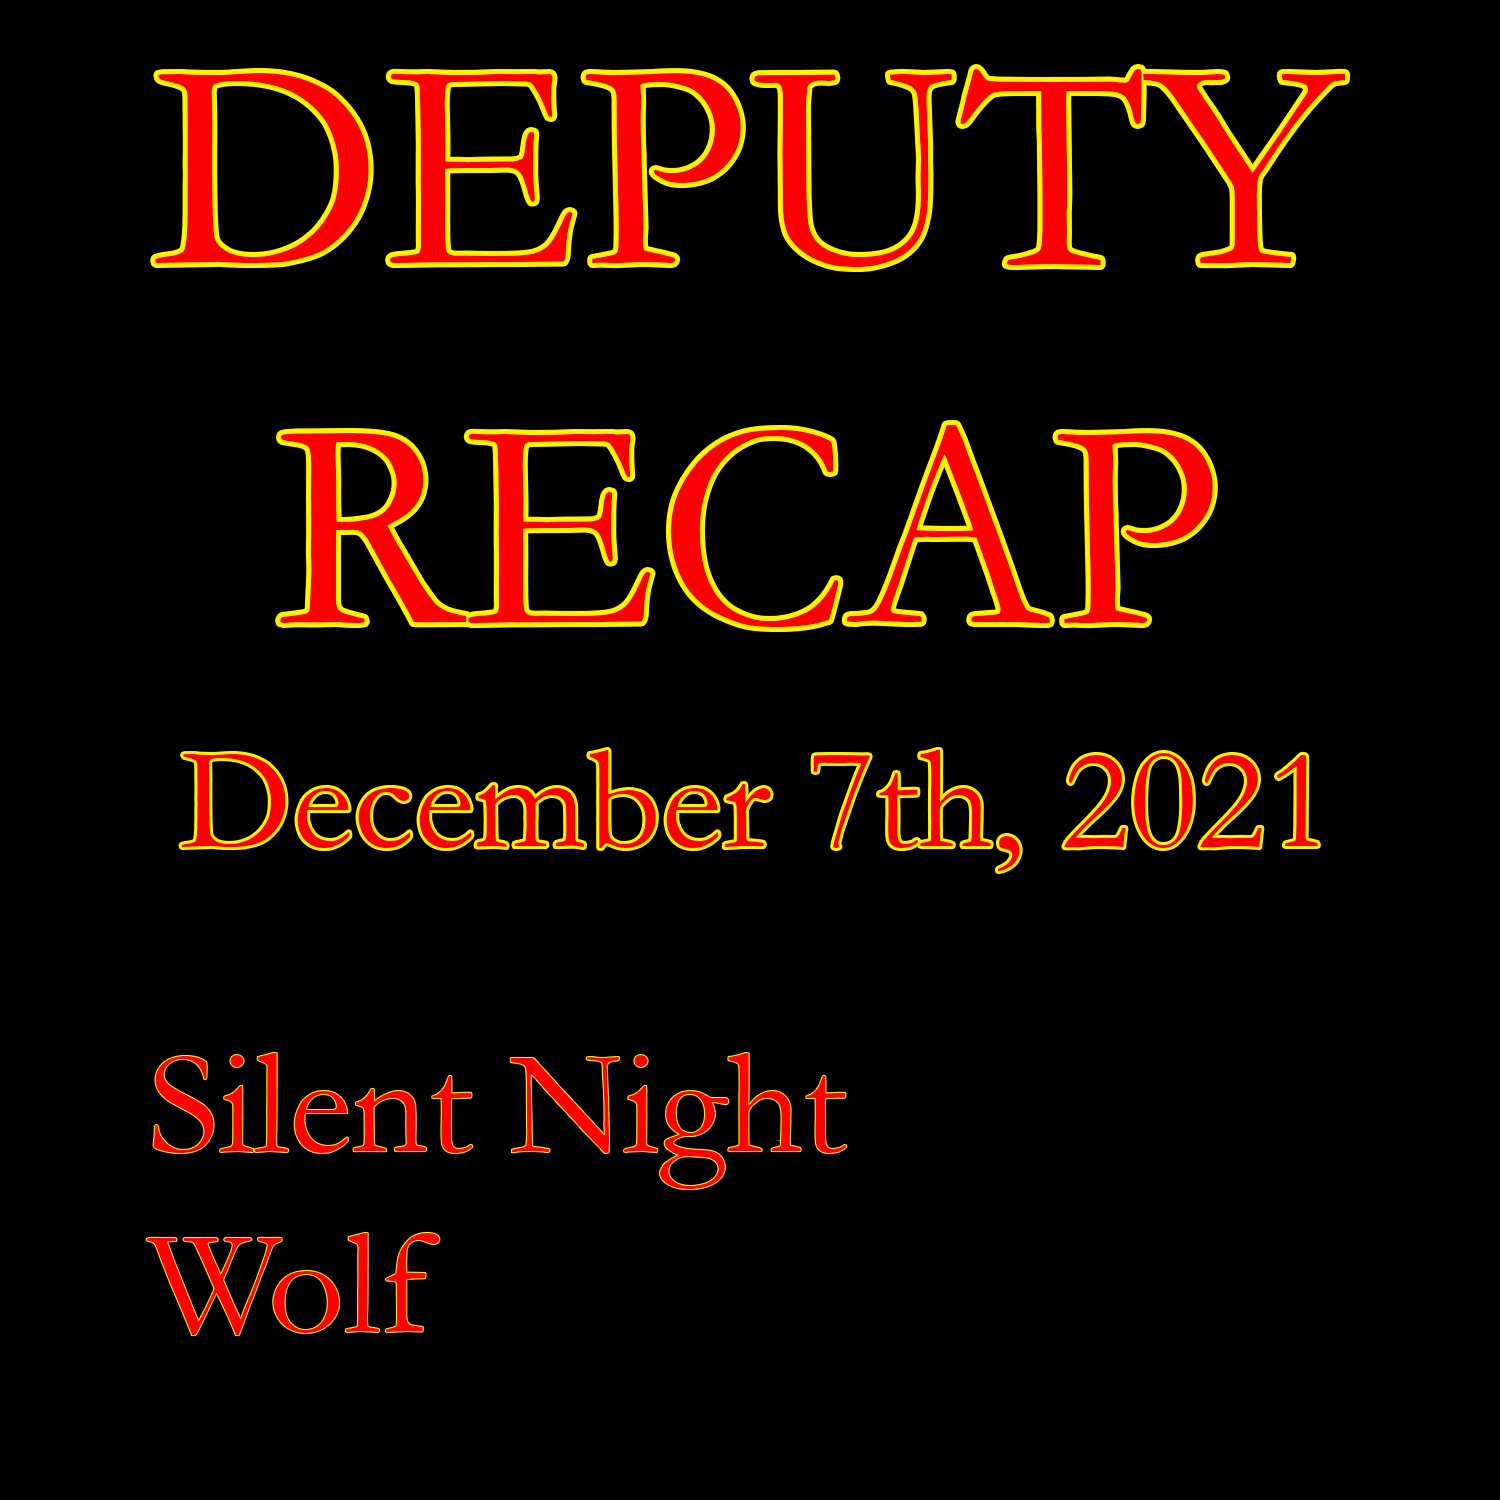 Movie Recap - December 7th, 2021